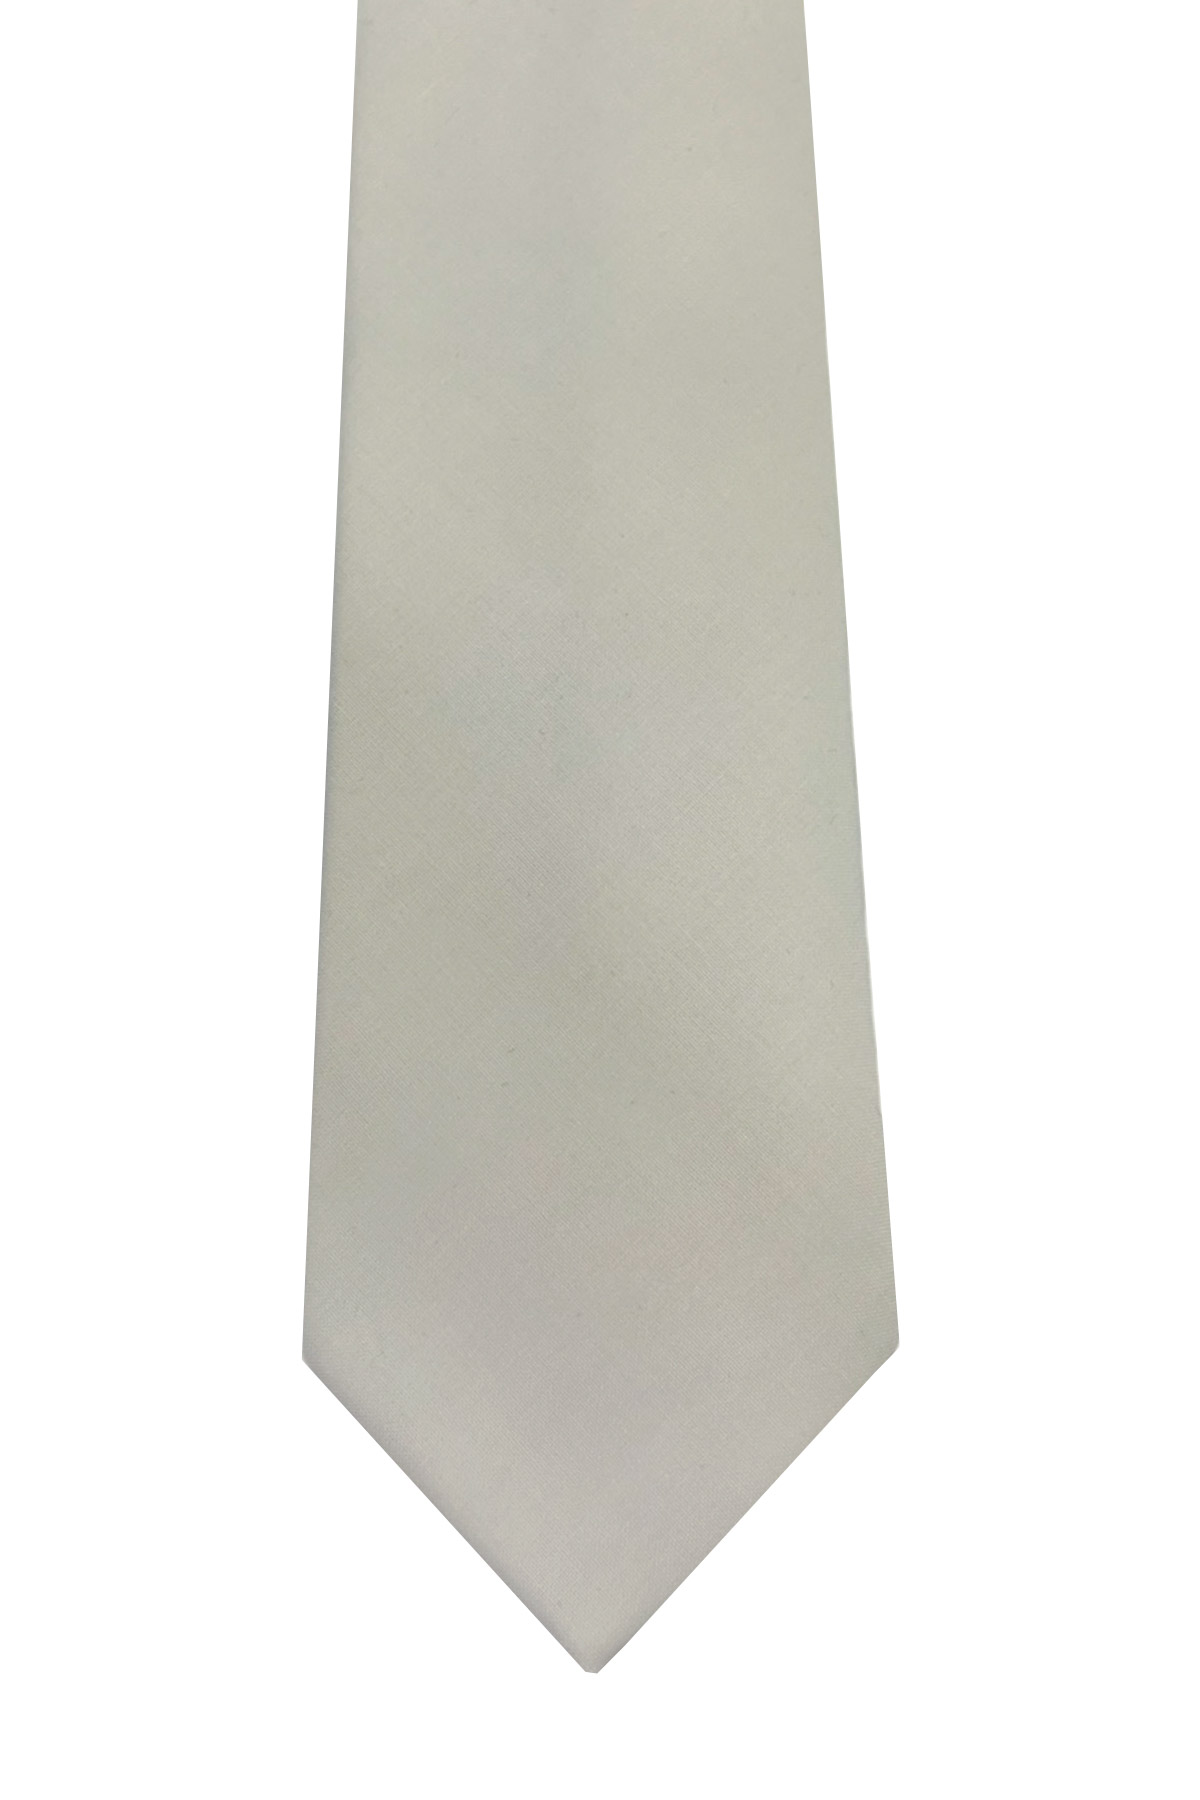 Cravatta uomo bianca in fresco lana super 130's